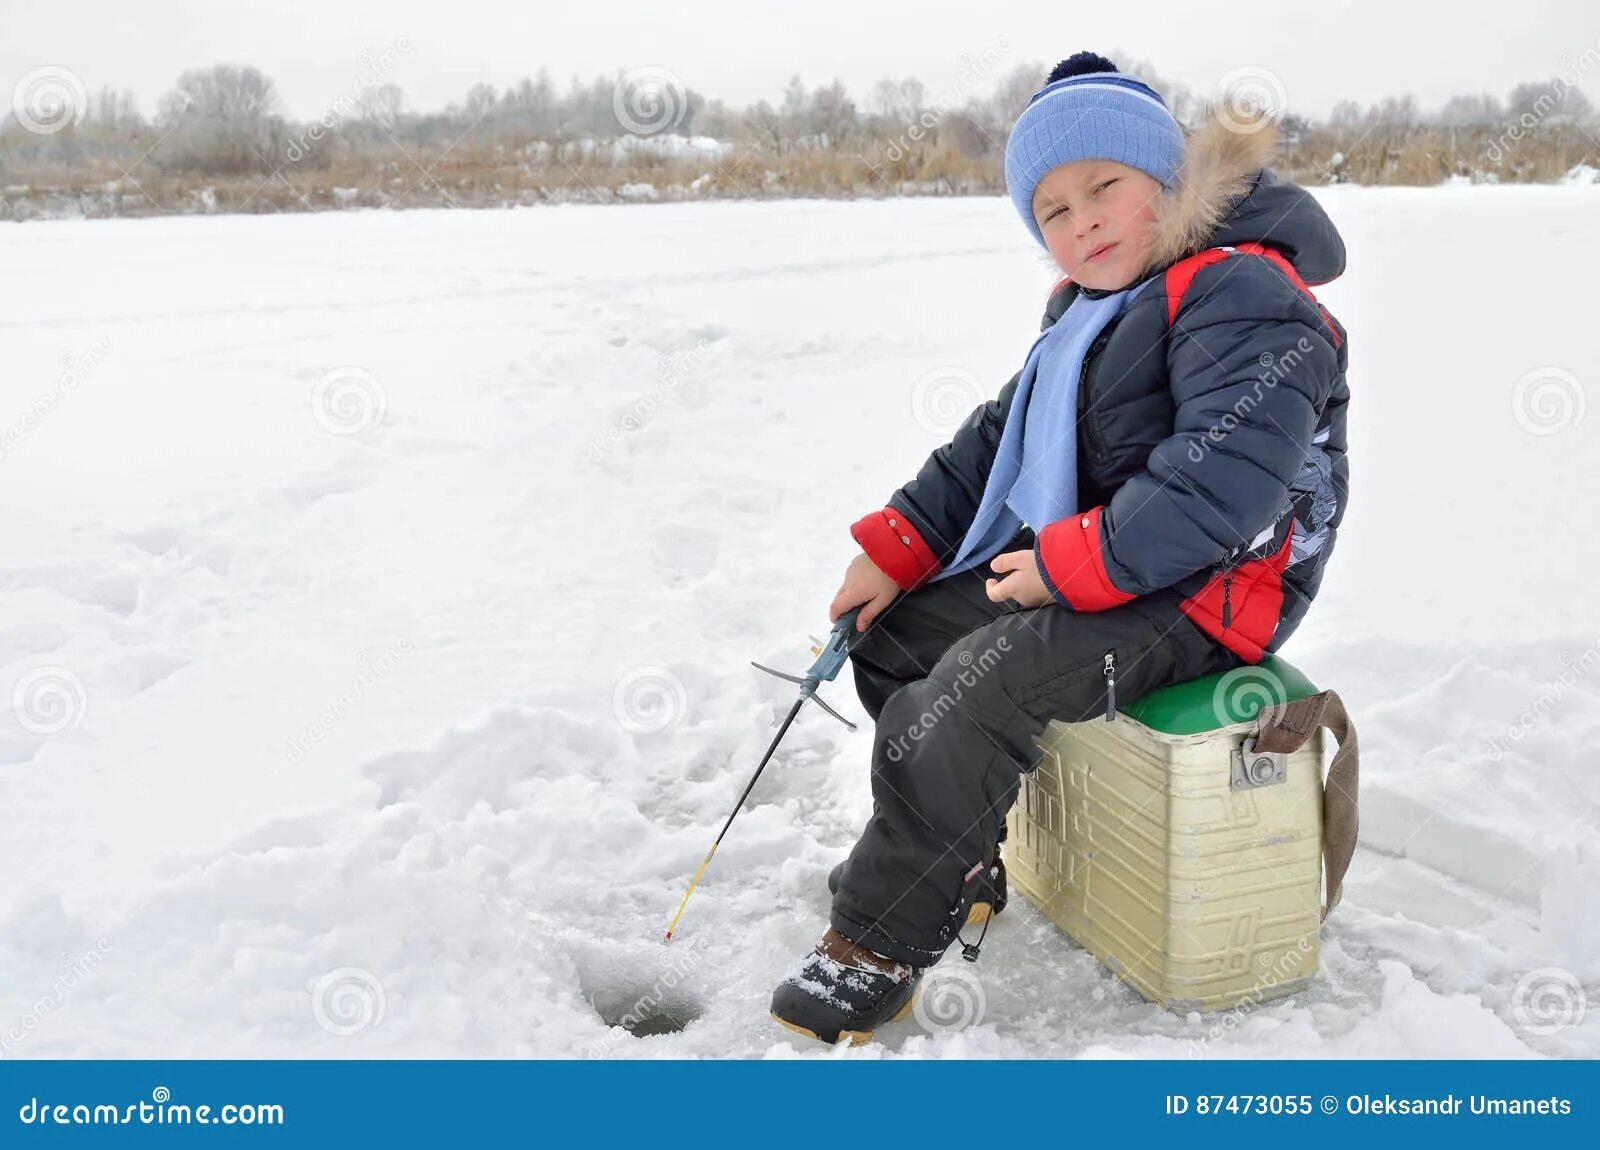 Frozen удочка. Мальчик на зимней рыбалке. Рыбалка мальчик зима. Мальчик ловит рыбу зимой. Мальчики на рыбалке зимой картинки.